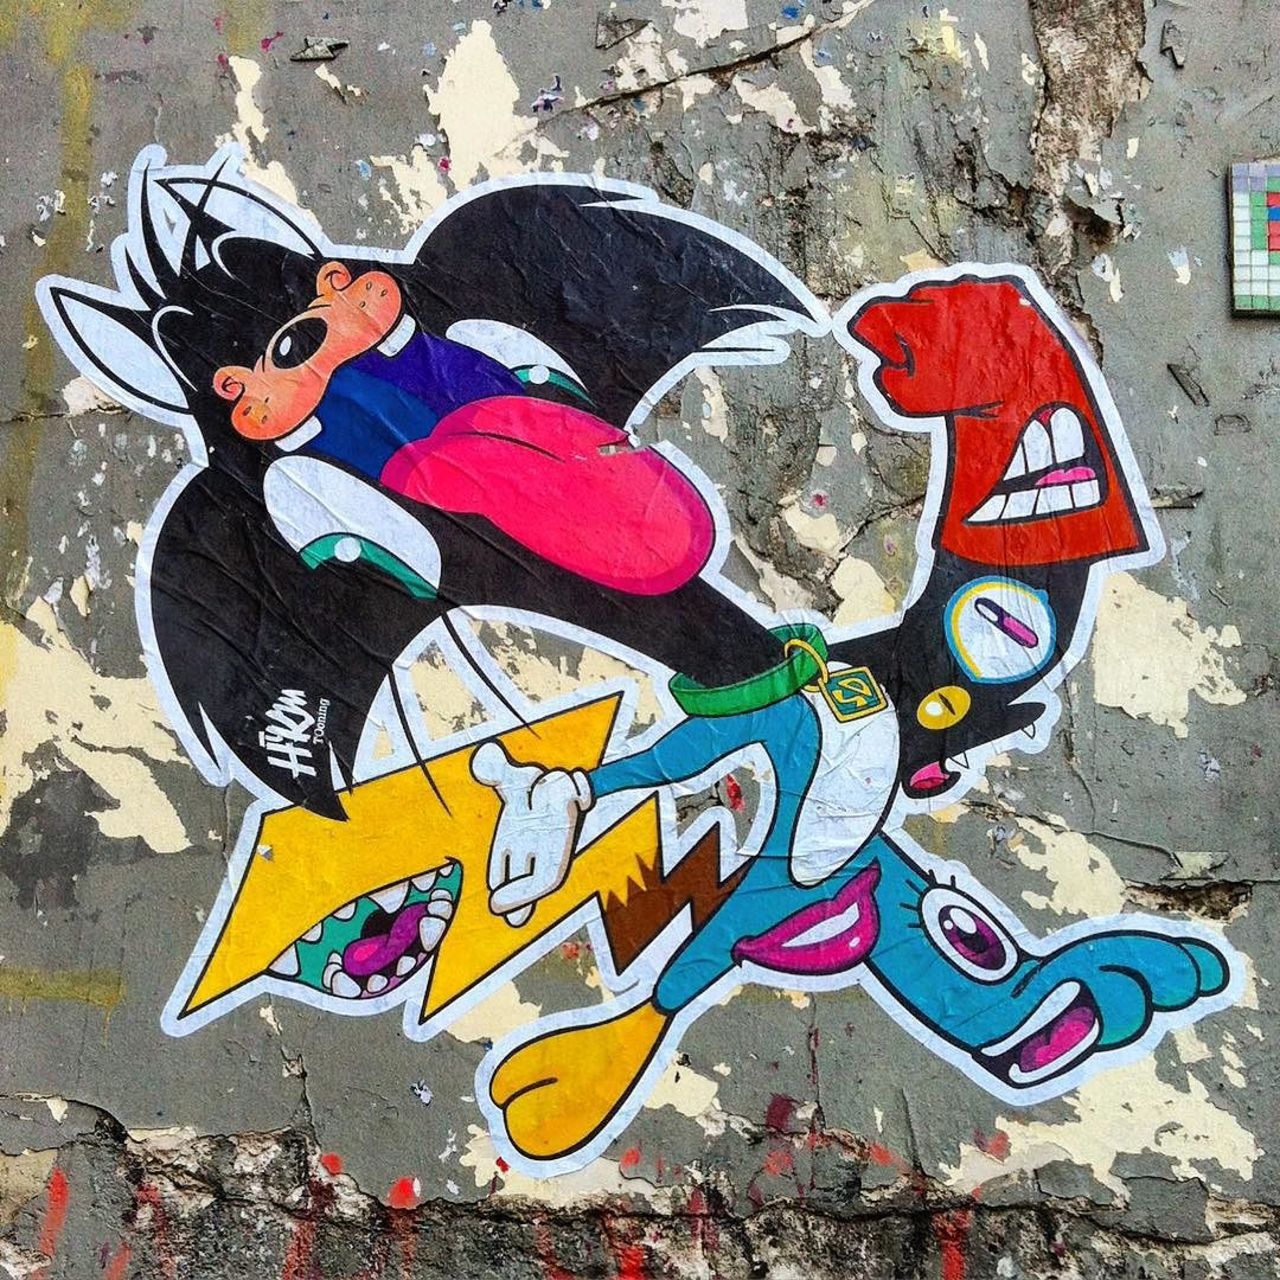 #Paris #graffiti photo by @jeanlucr http://ift.tt/1LIkpPi #StreetArt https://t.co/qics4KMzDj